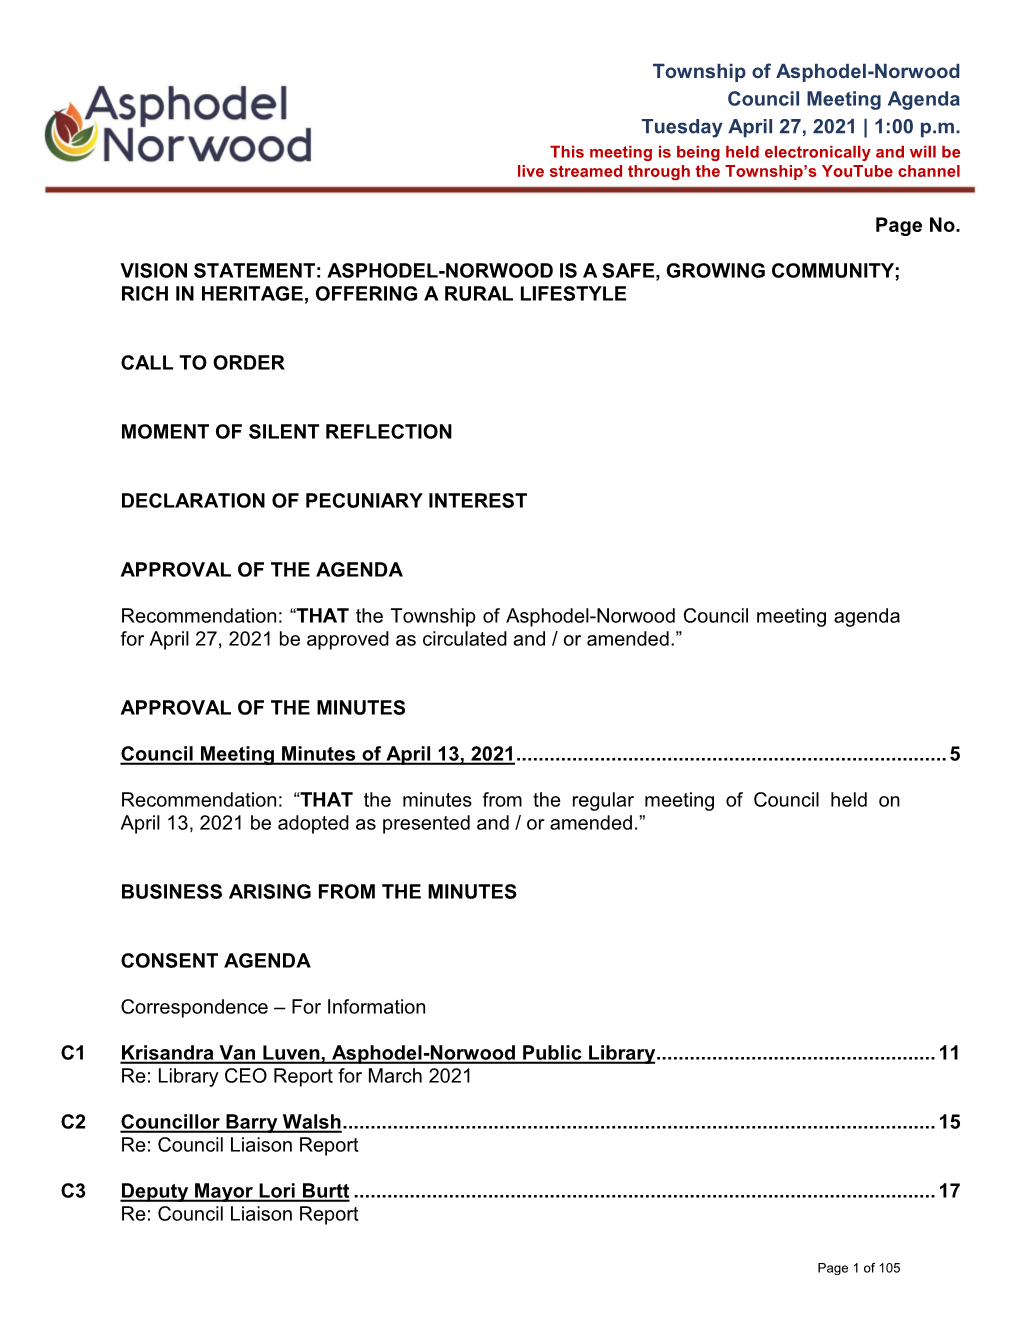 Township of Asphodel-Norwood Council Meeting Agenda Tuesday April 27, 2021 | 1:00 P.M